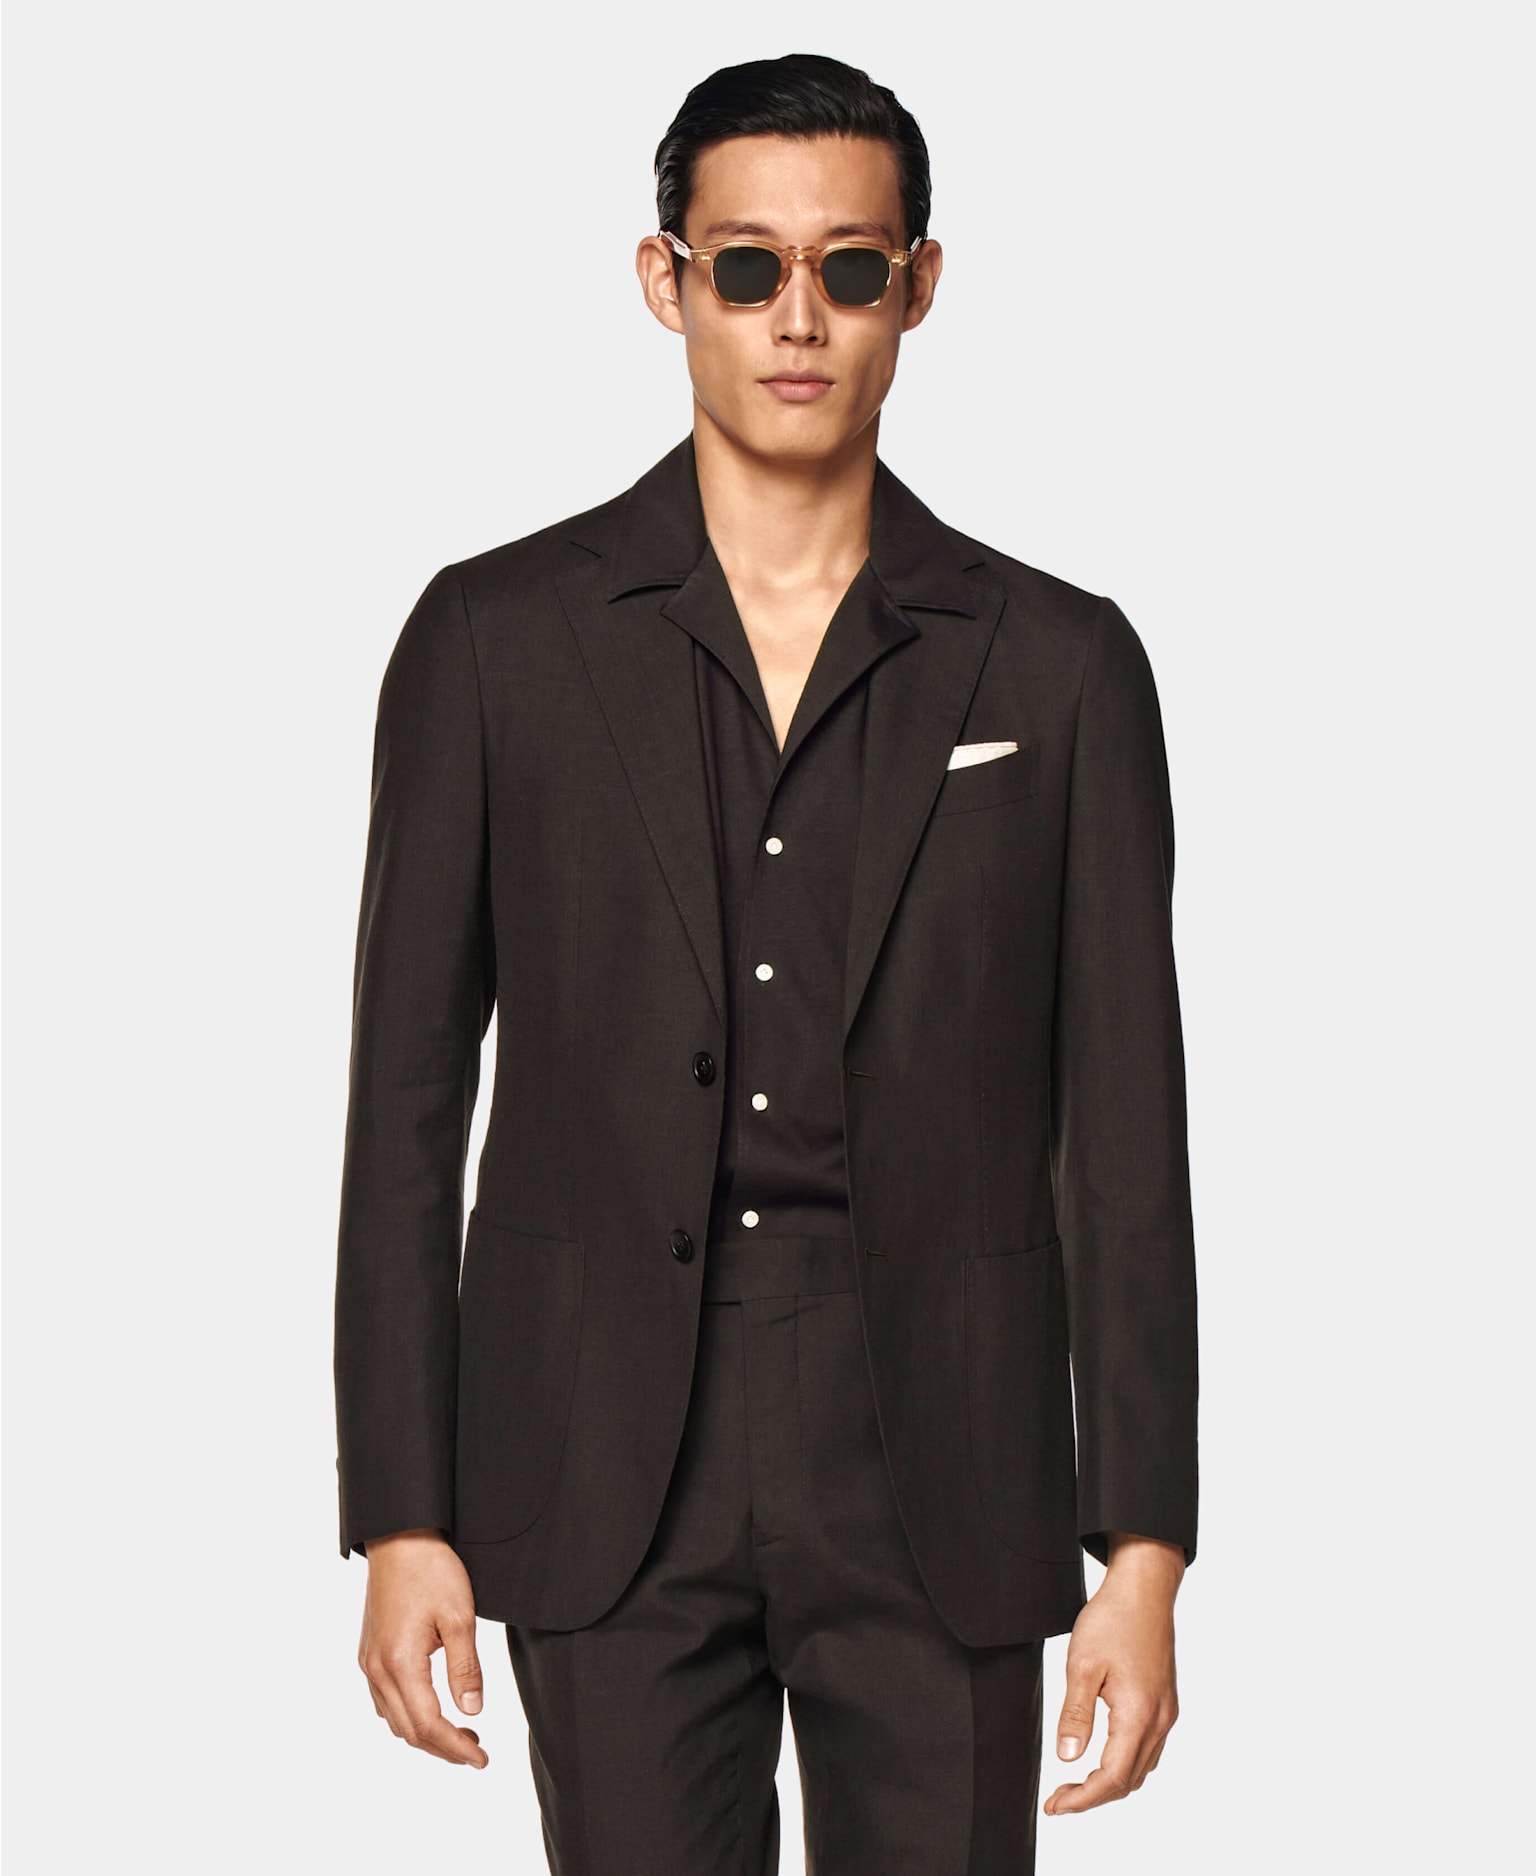 A lightweight fabric great for summer, the seersucker suit.